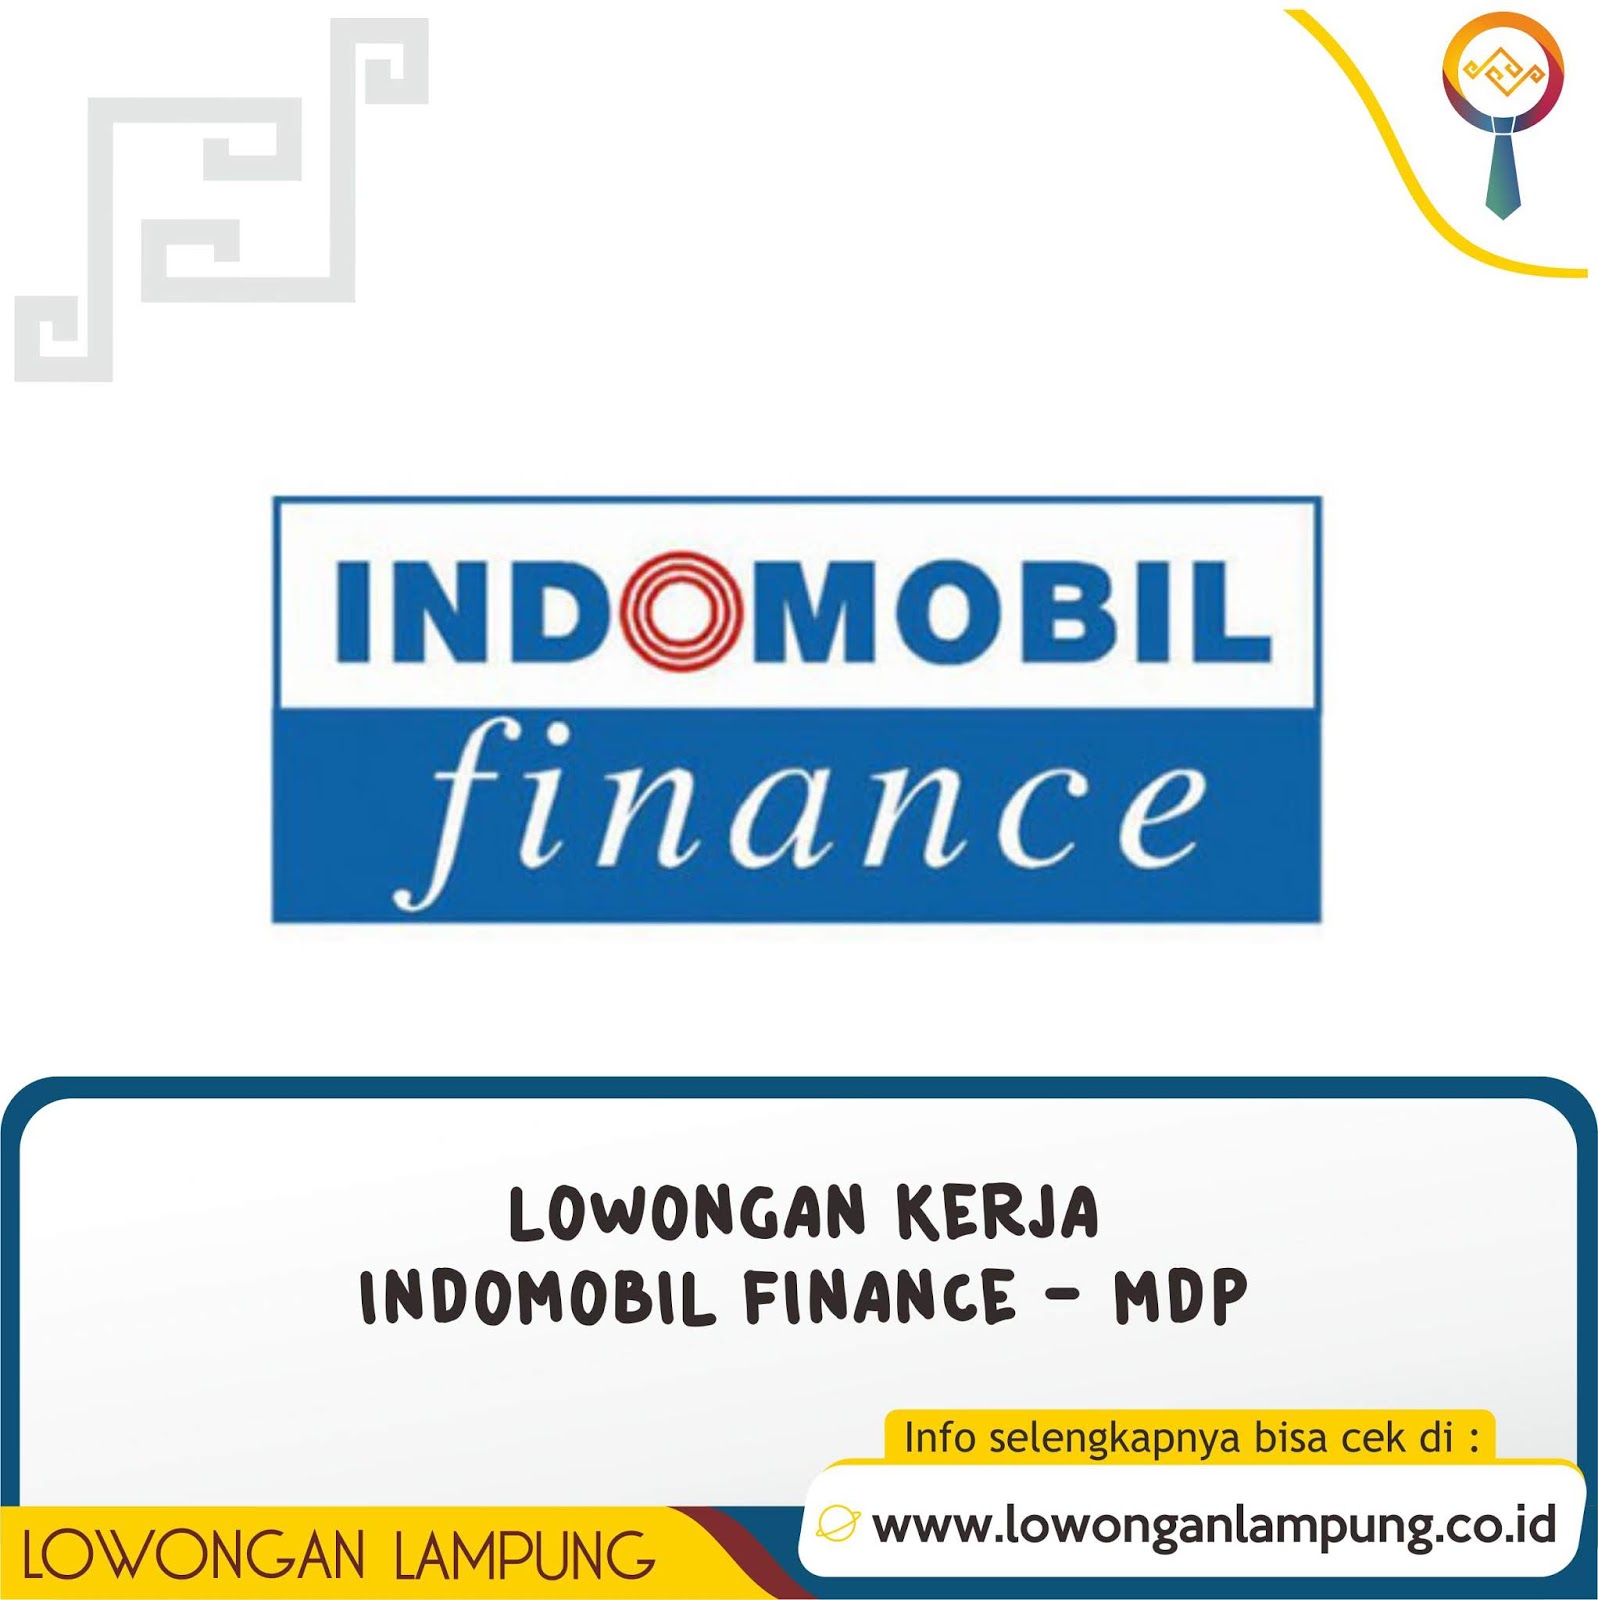 Lowongan Kerja Indomobil Finance Lowongan Lampung